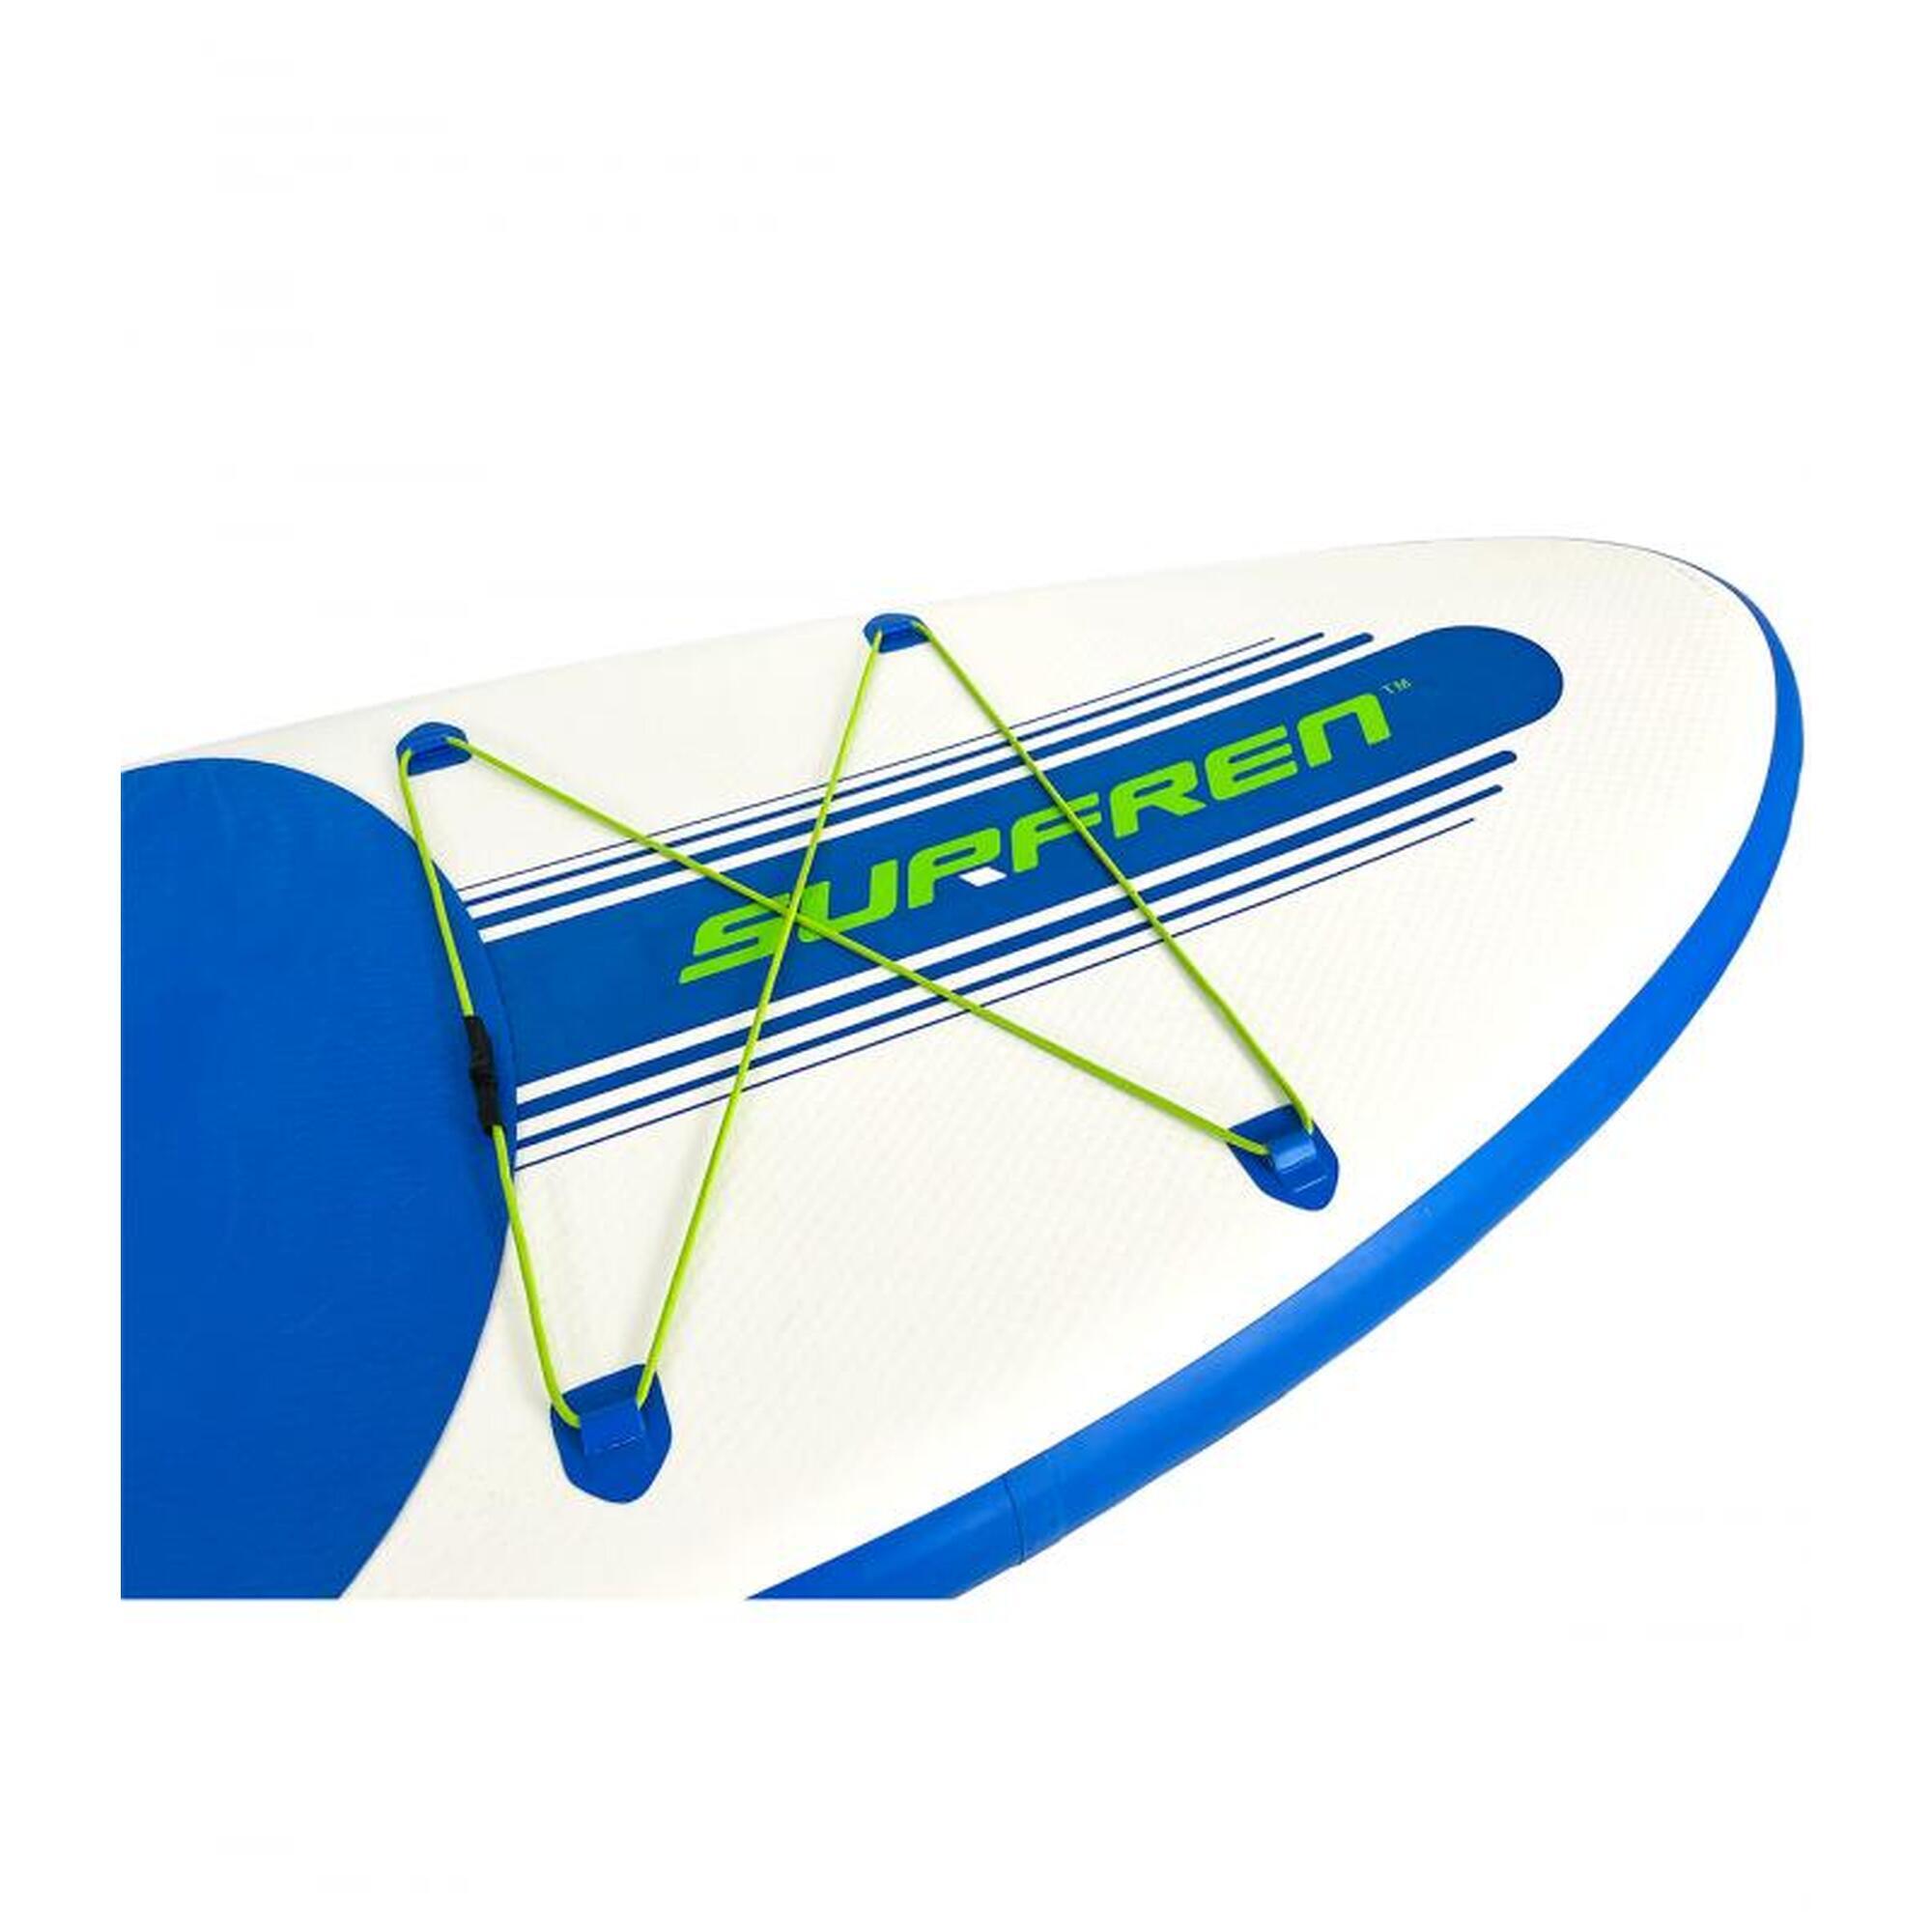 SURFREN S2 11'0" Opblaasbaar Stand Up Paddle Board Blauw / Groen